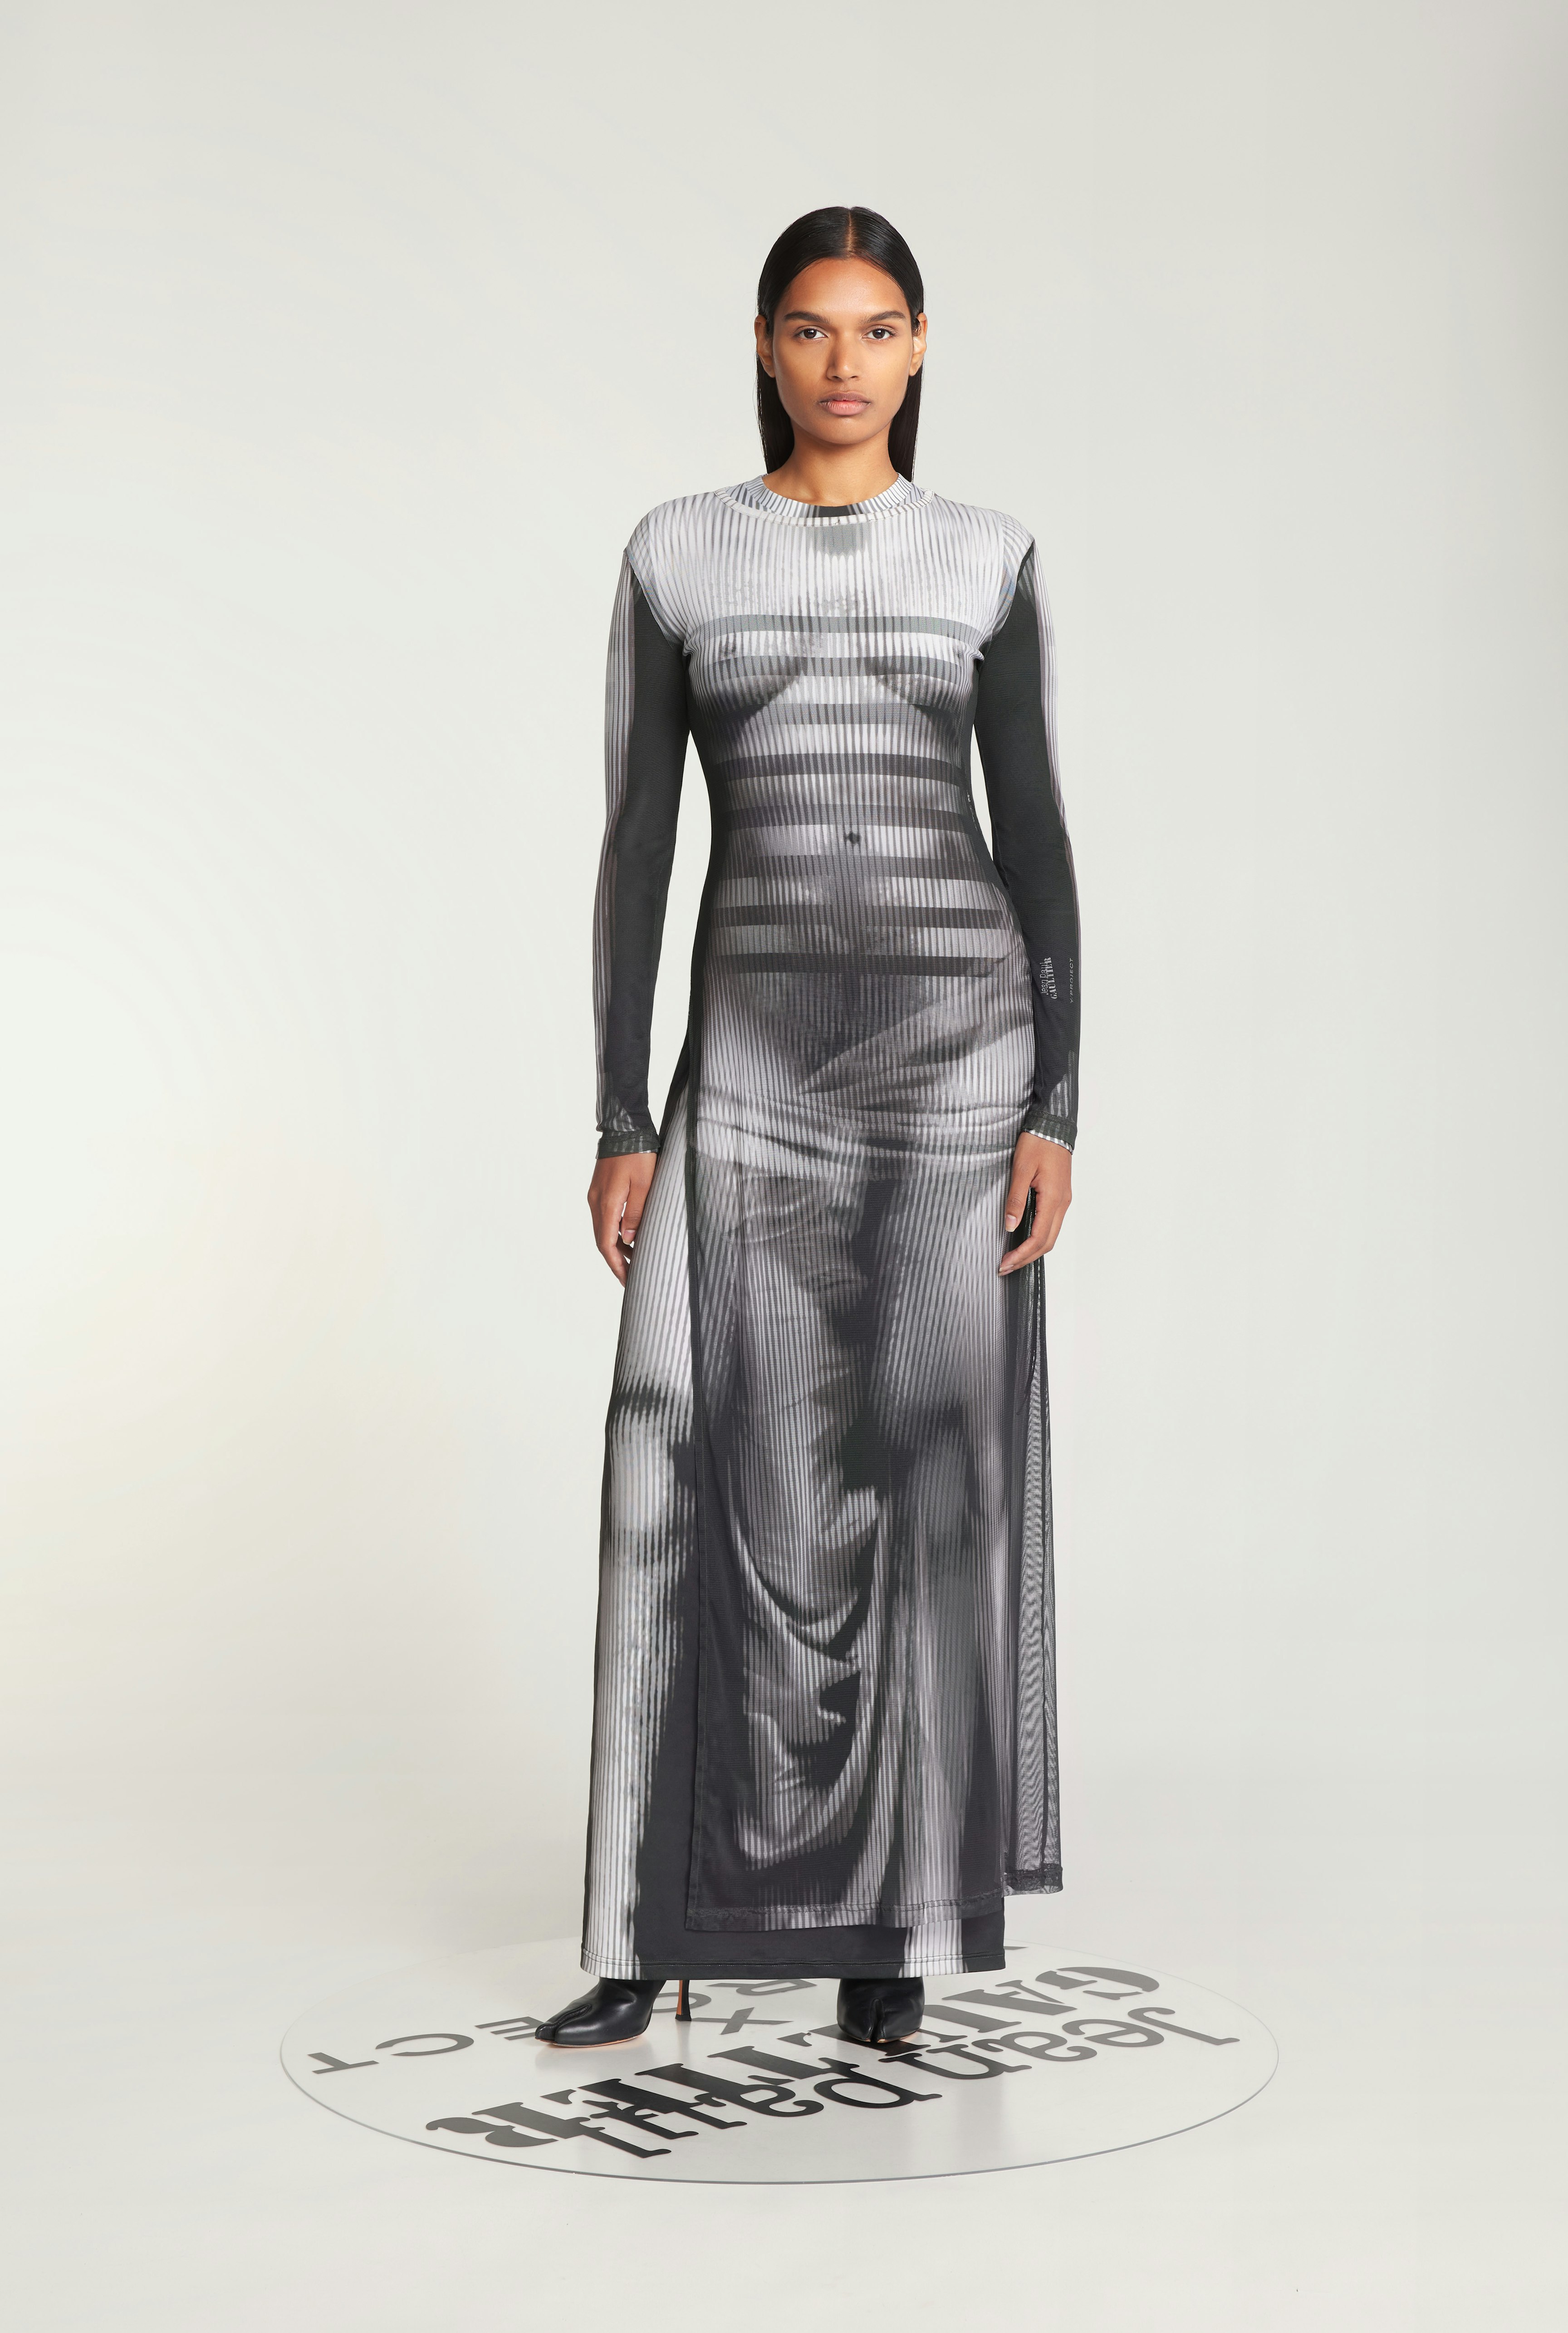 The Black & White Body Morph Dress by Jean Paul Gaultier x Y/Project